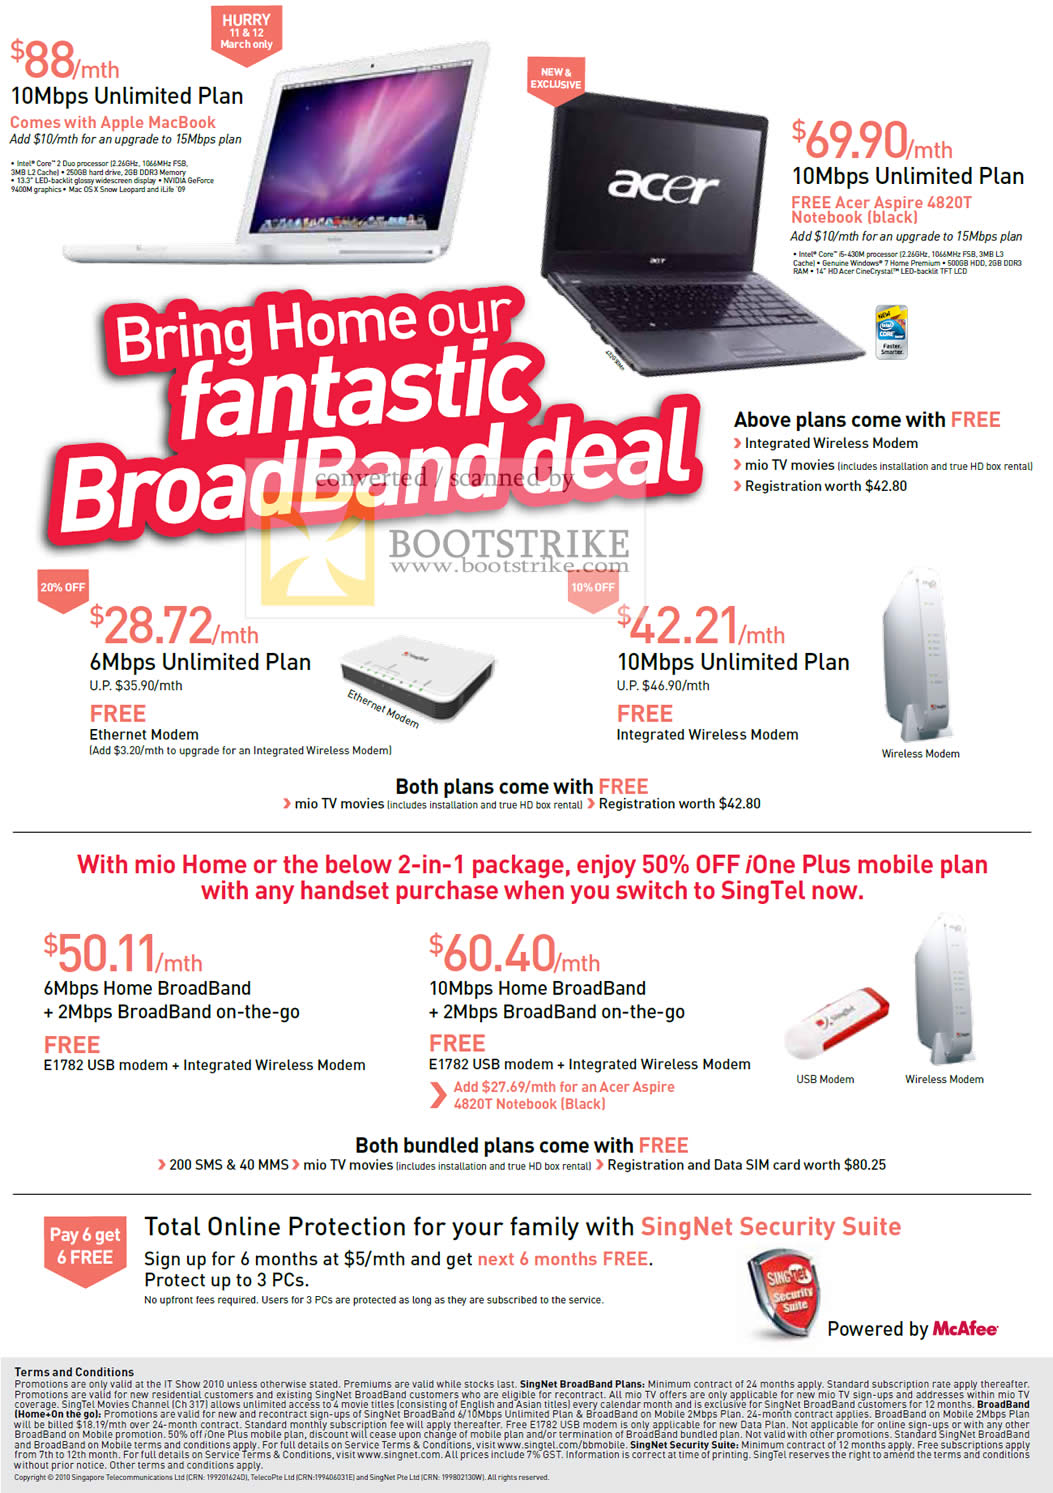 IT Show 2010 price list image brochure of Singtel Singnet Apple Macbook Acer Aspire 4820T Broadband Mobile